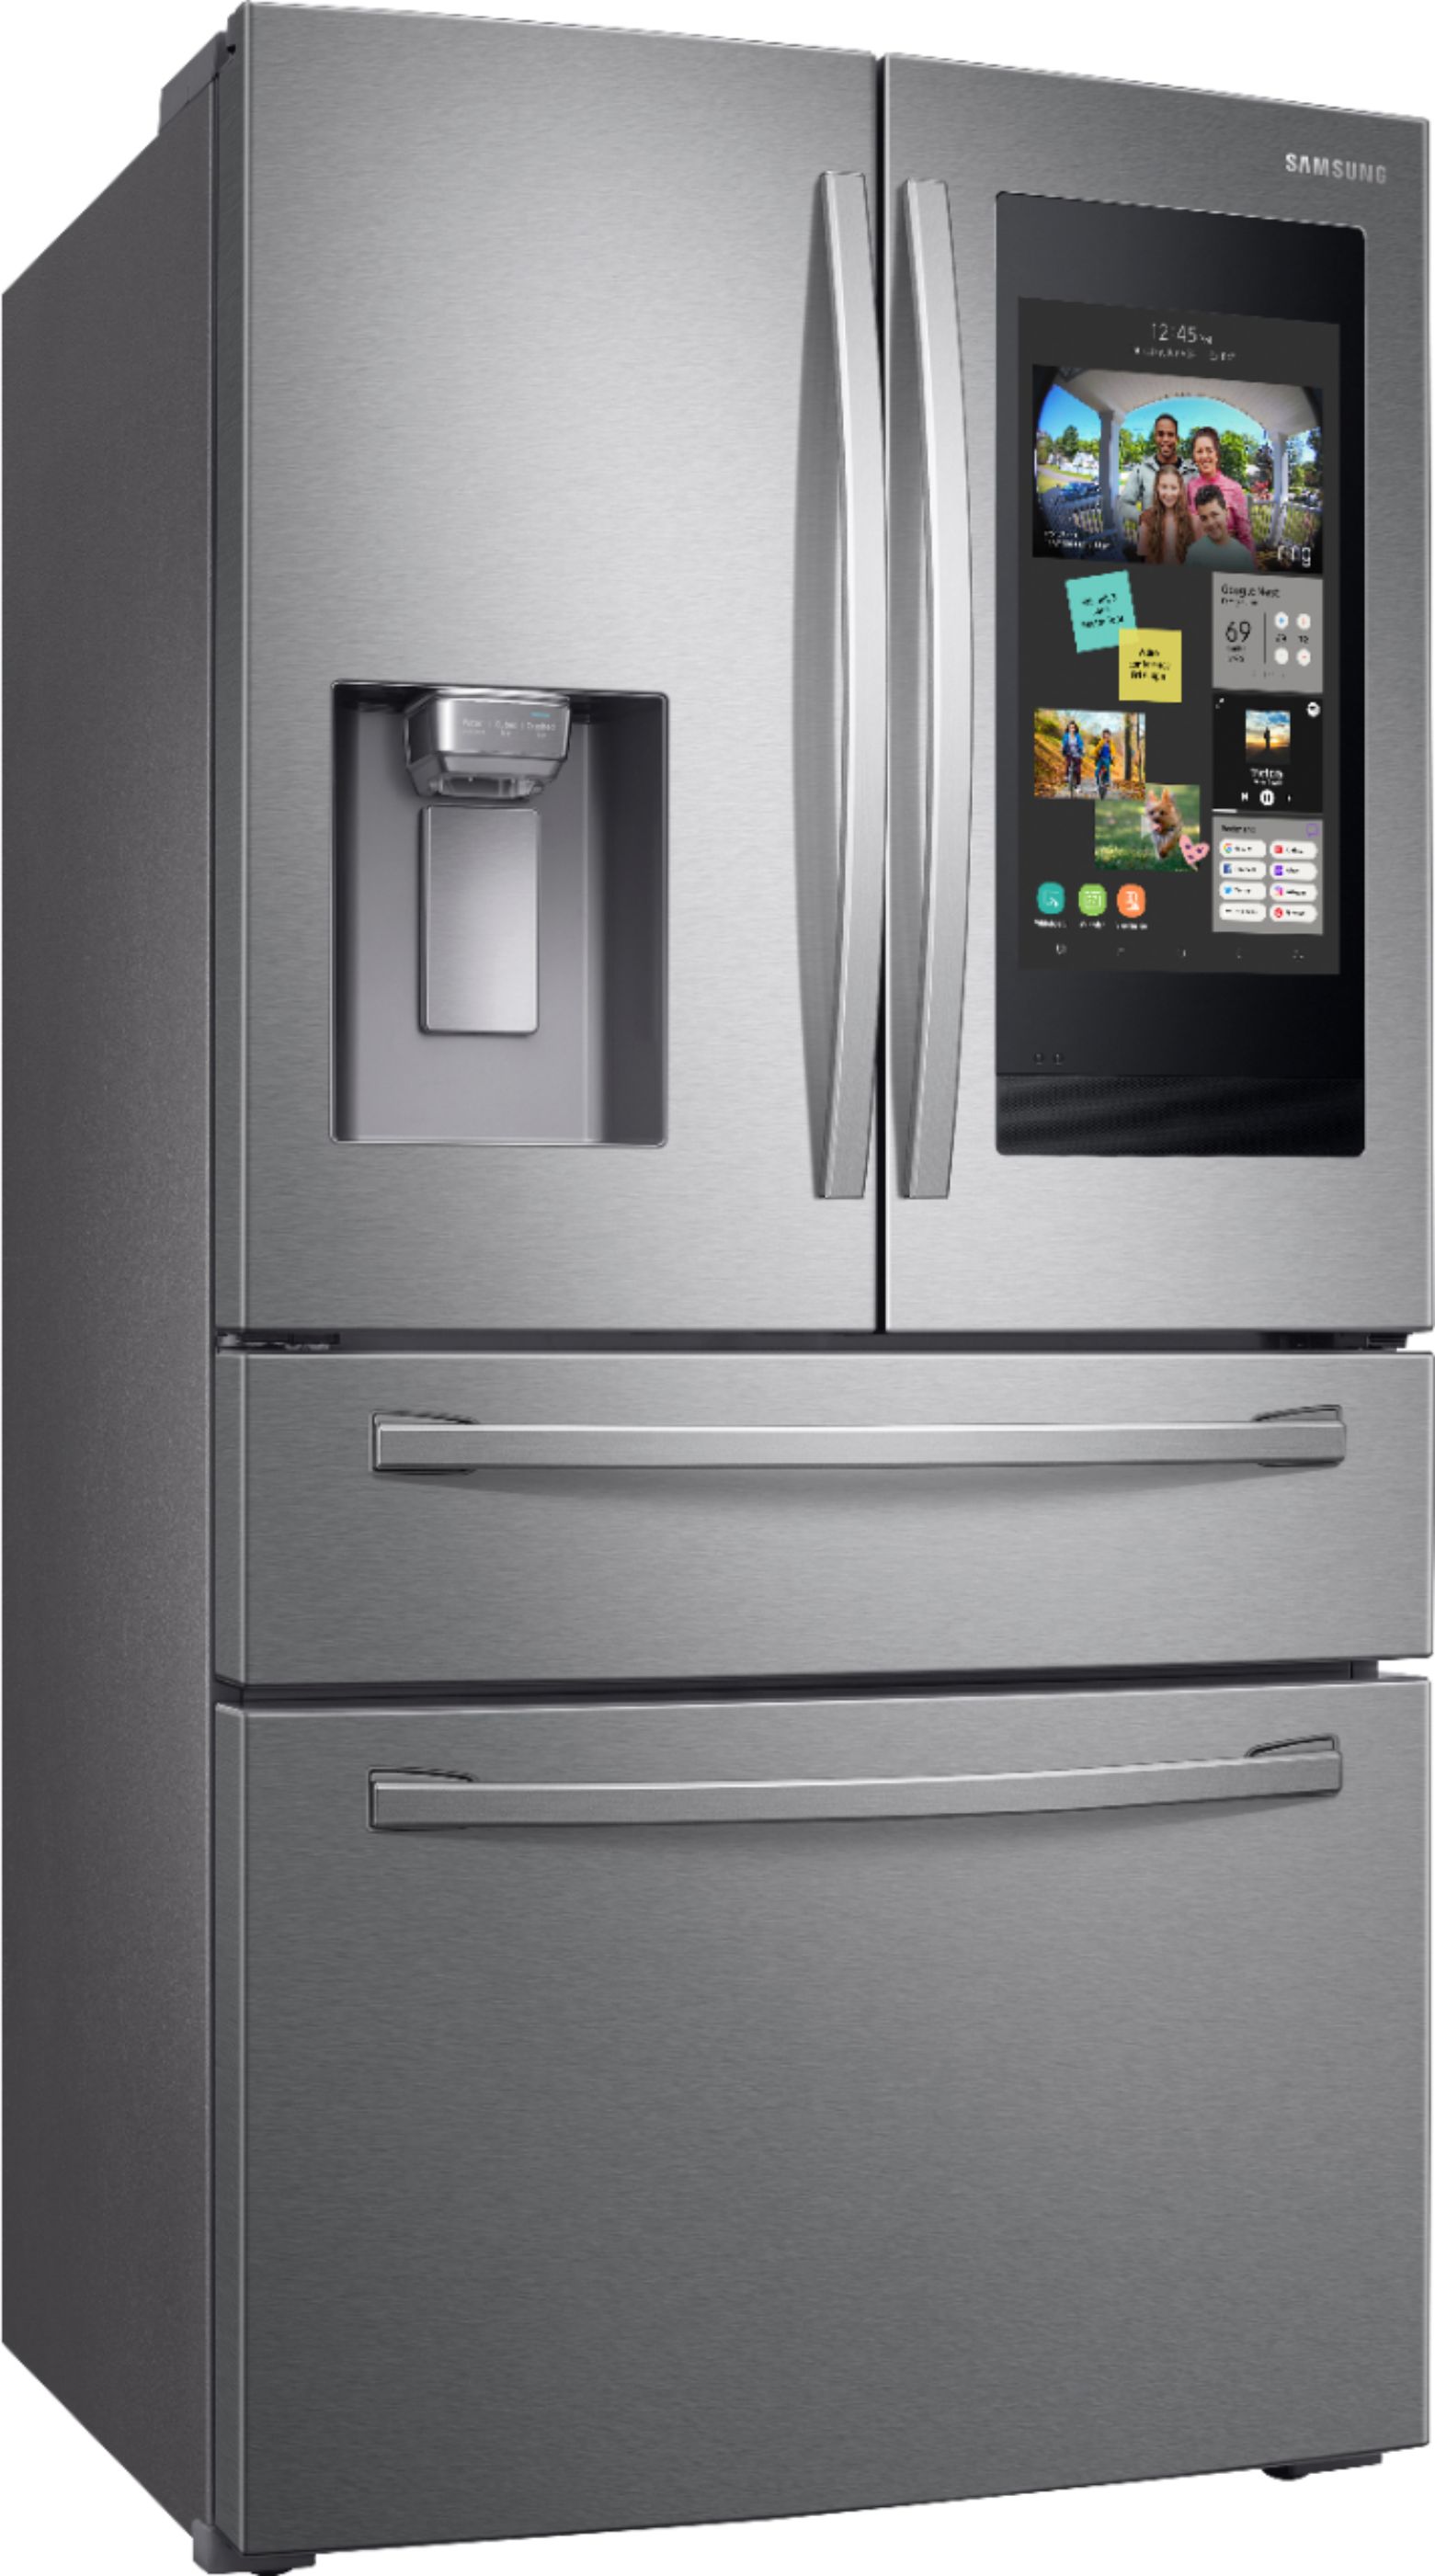 Samsung Family Hub 22 2 Cu Ft 4 Door French Door Counter Depth Fingerprint Resistant Refrigerator Stainless Steel Rf22r7551sr Best Buy